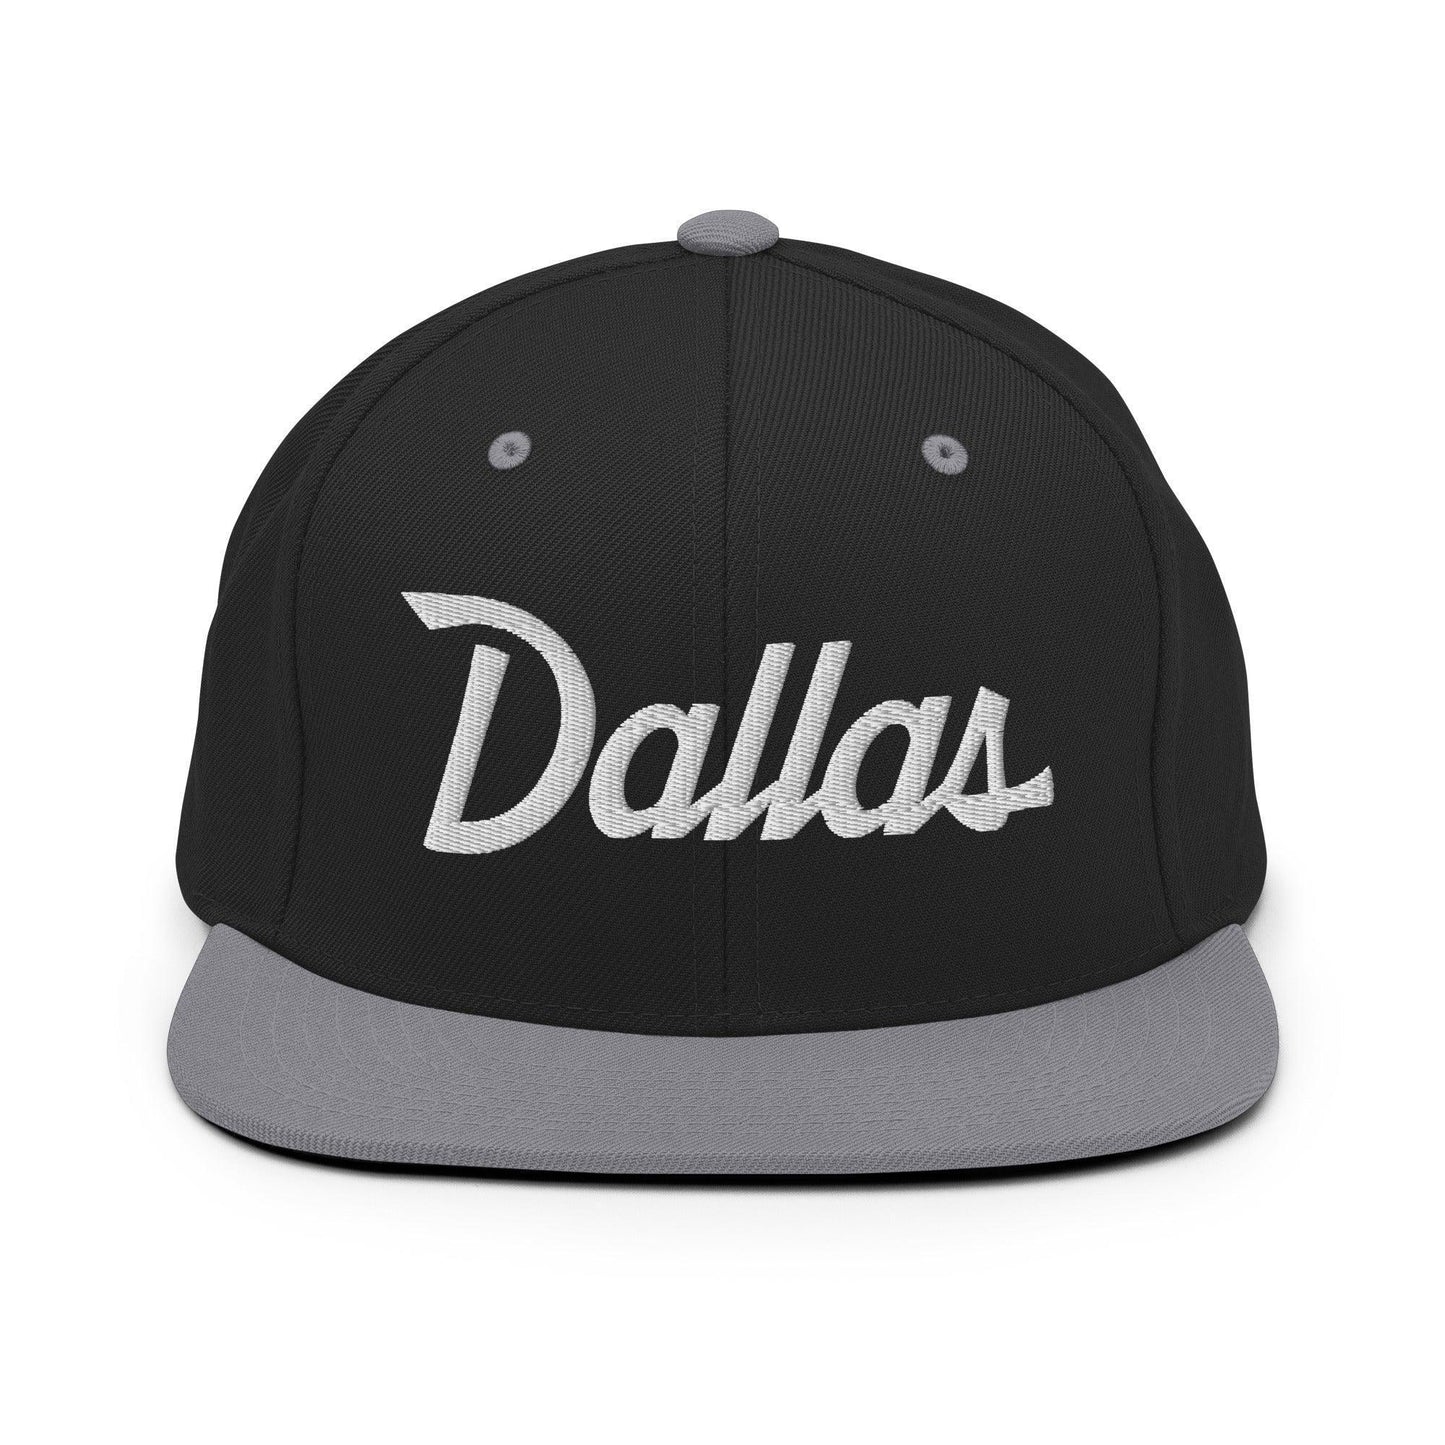 Dallas Script Snapback Hat Black Silver